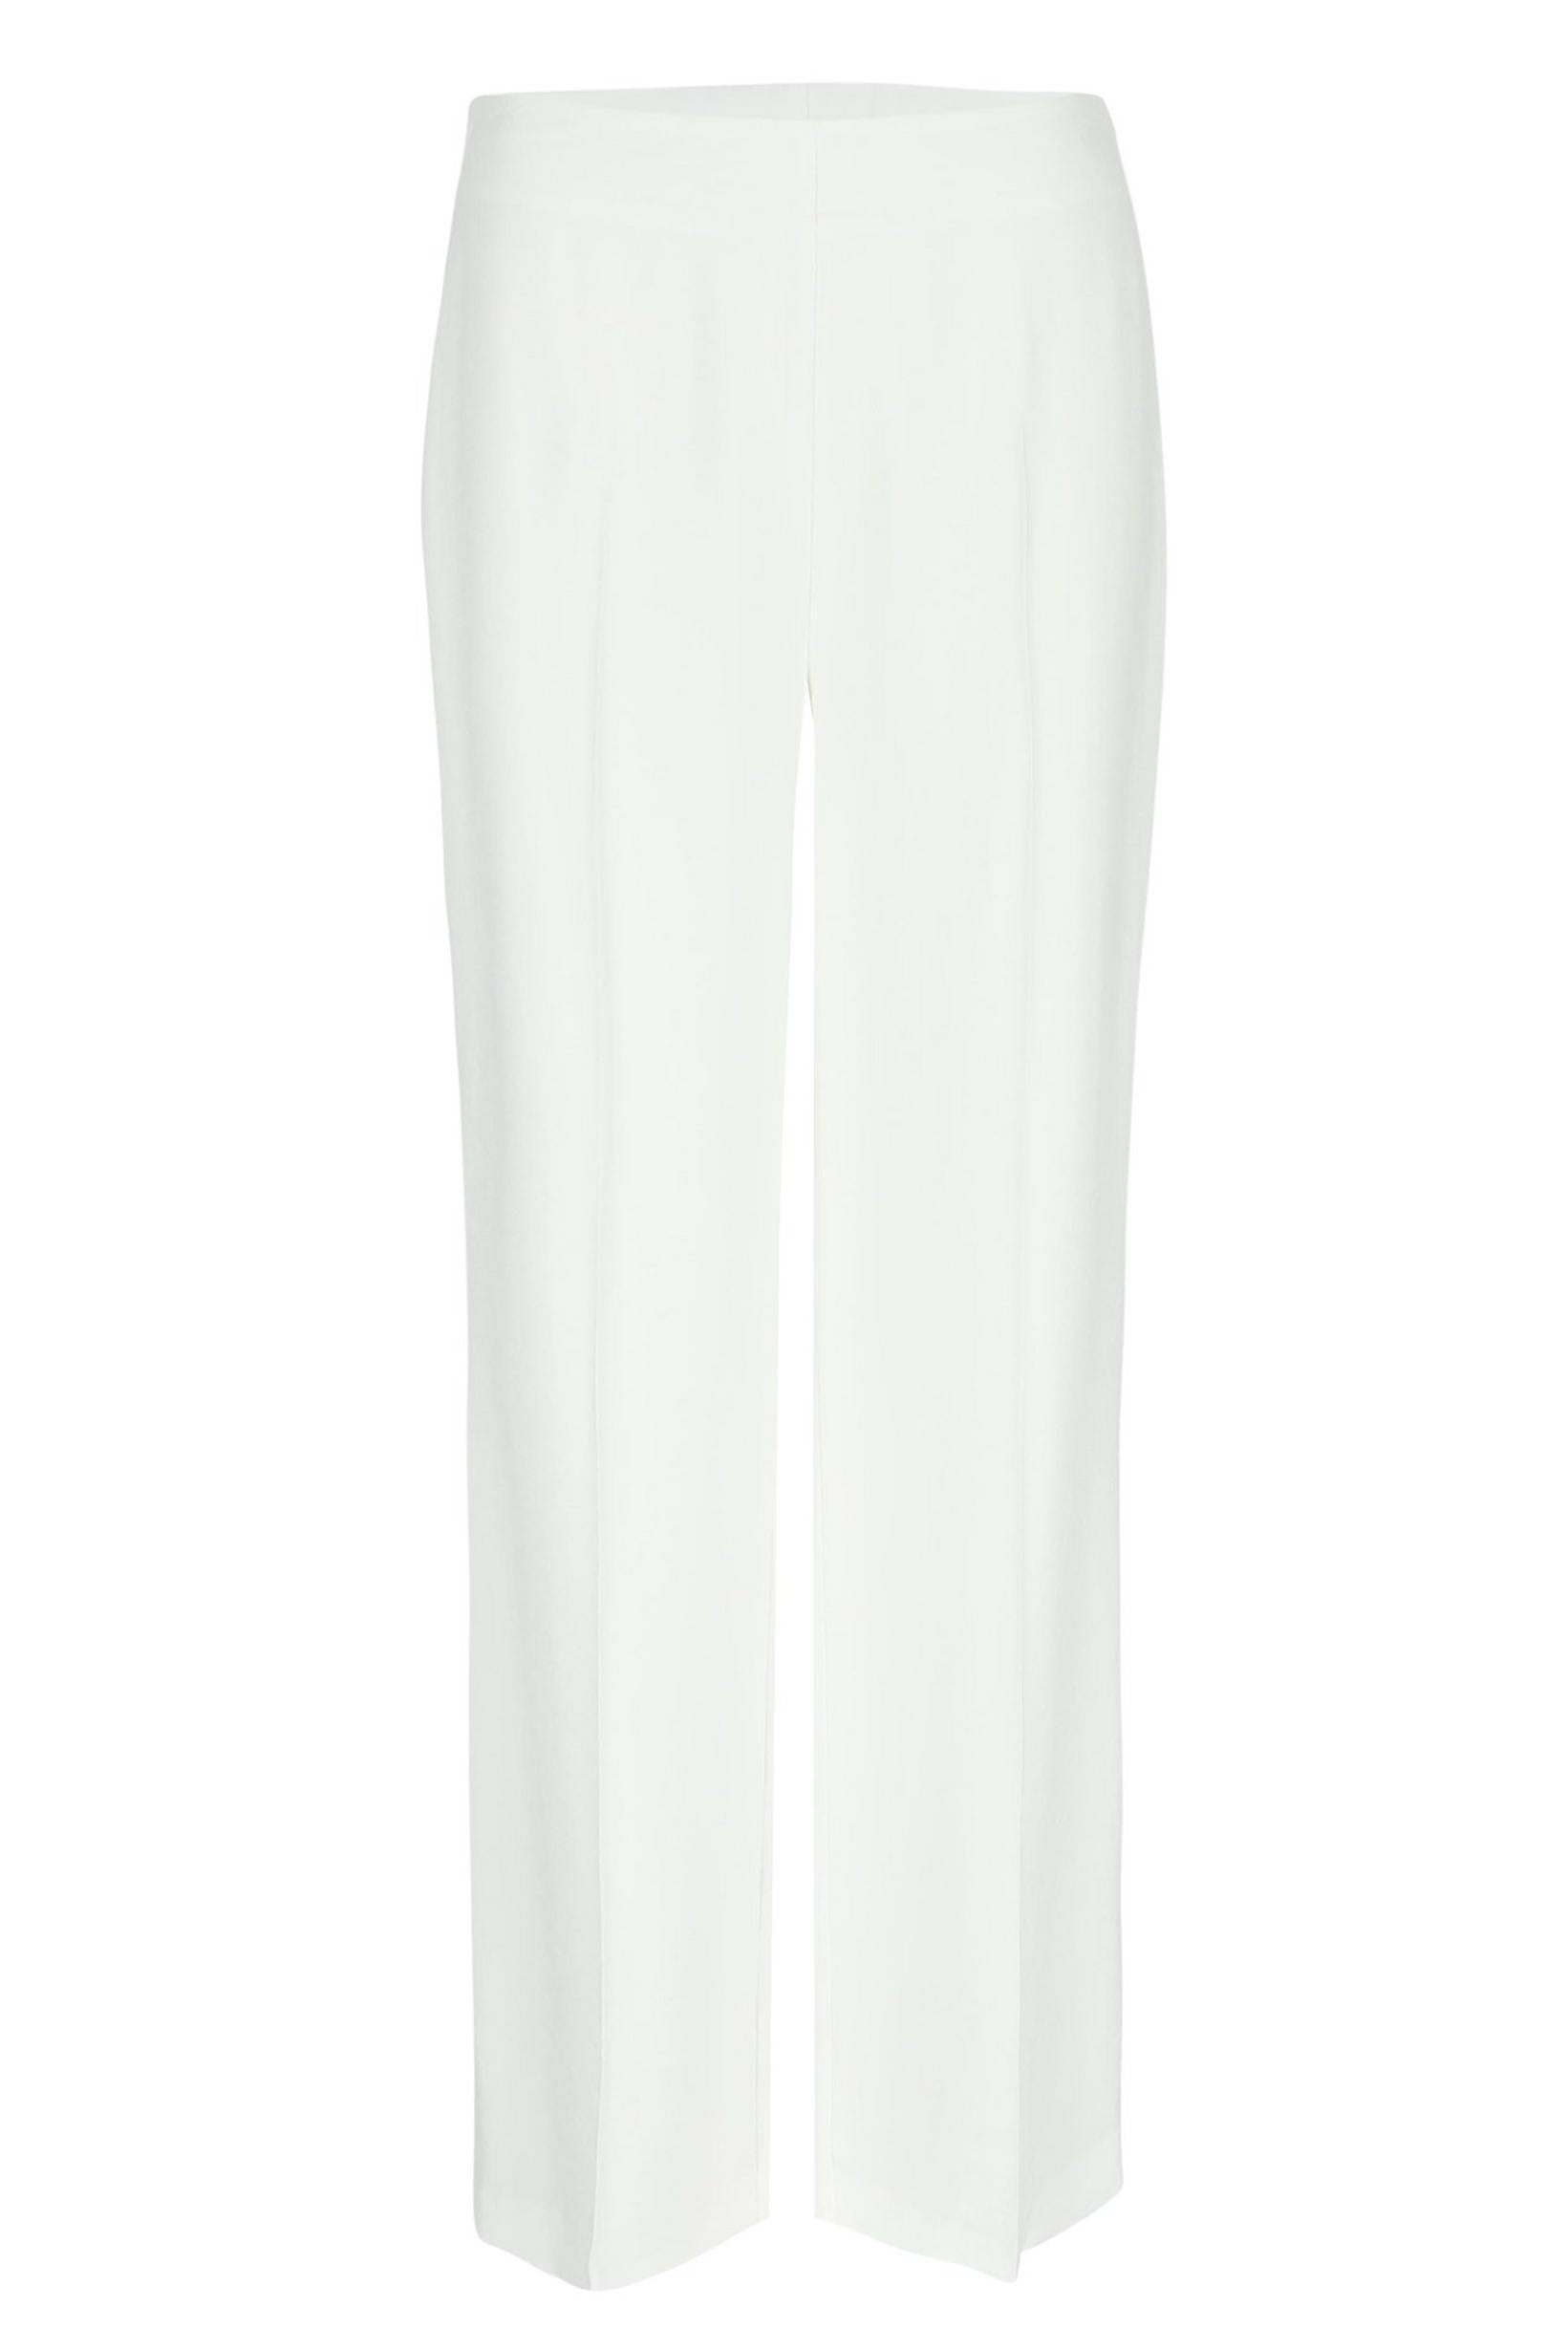 Pantalon Blanc Mayerline (Catinga2 1018/221)